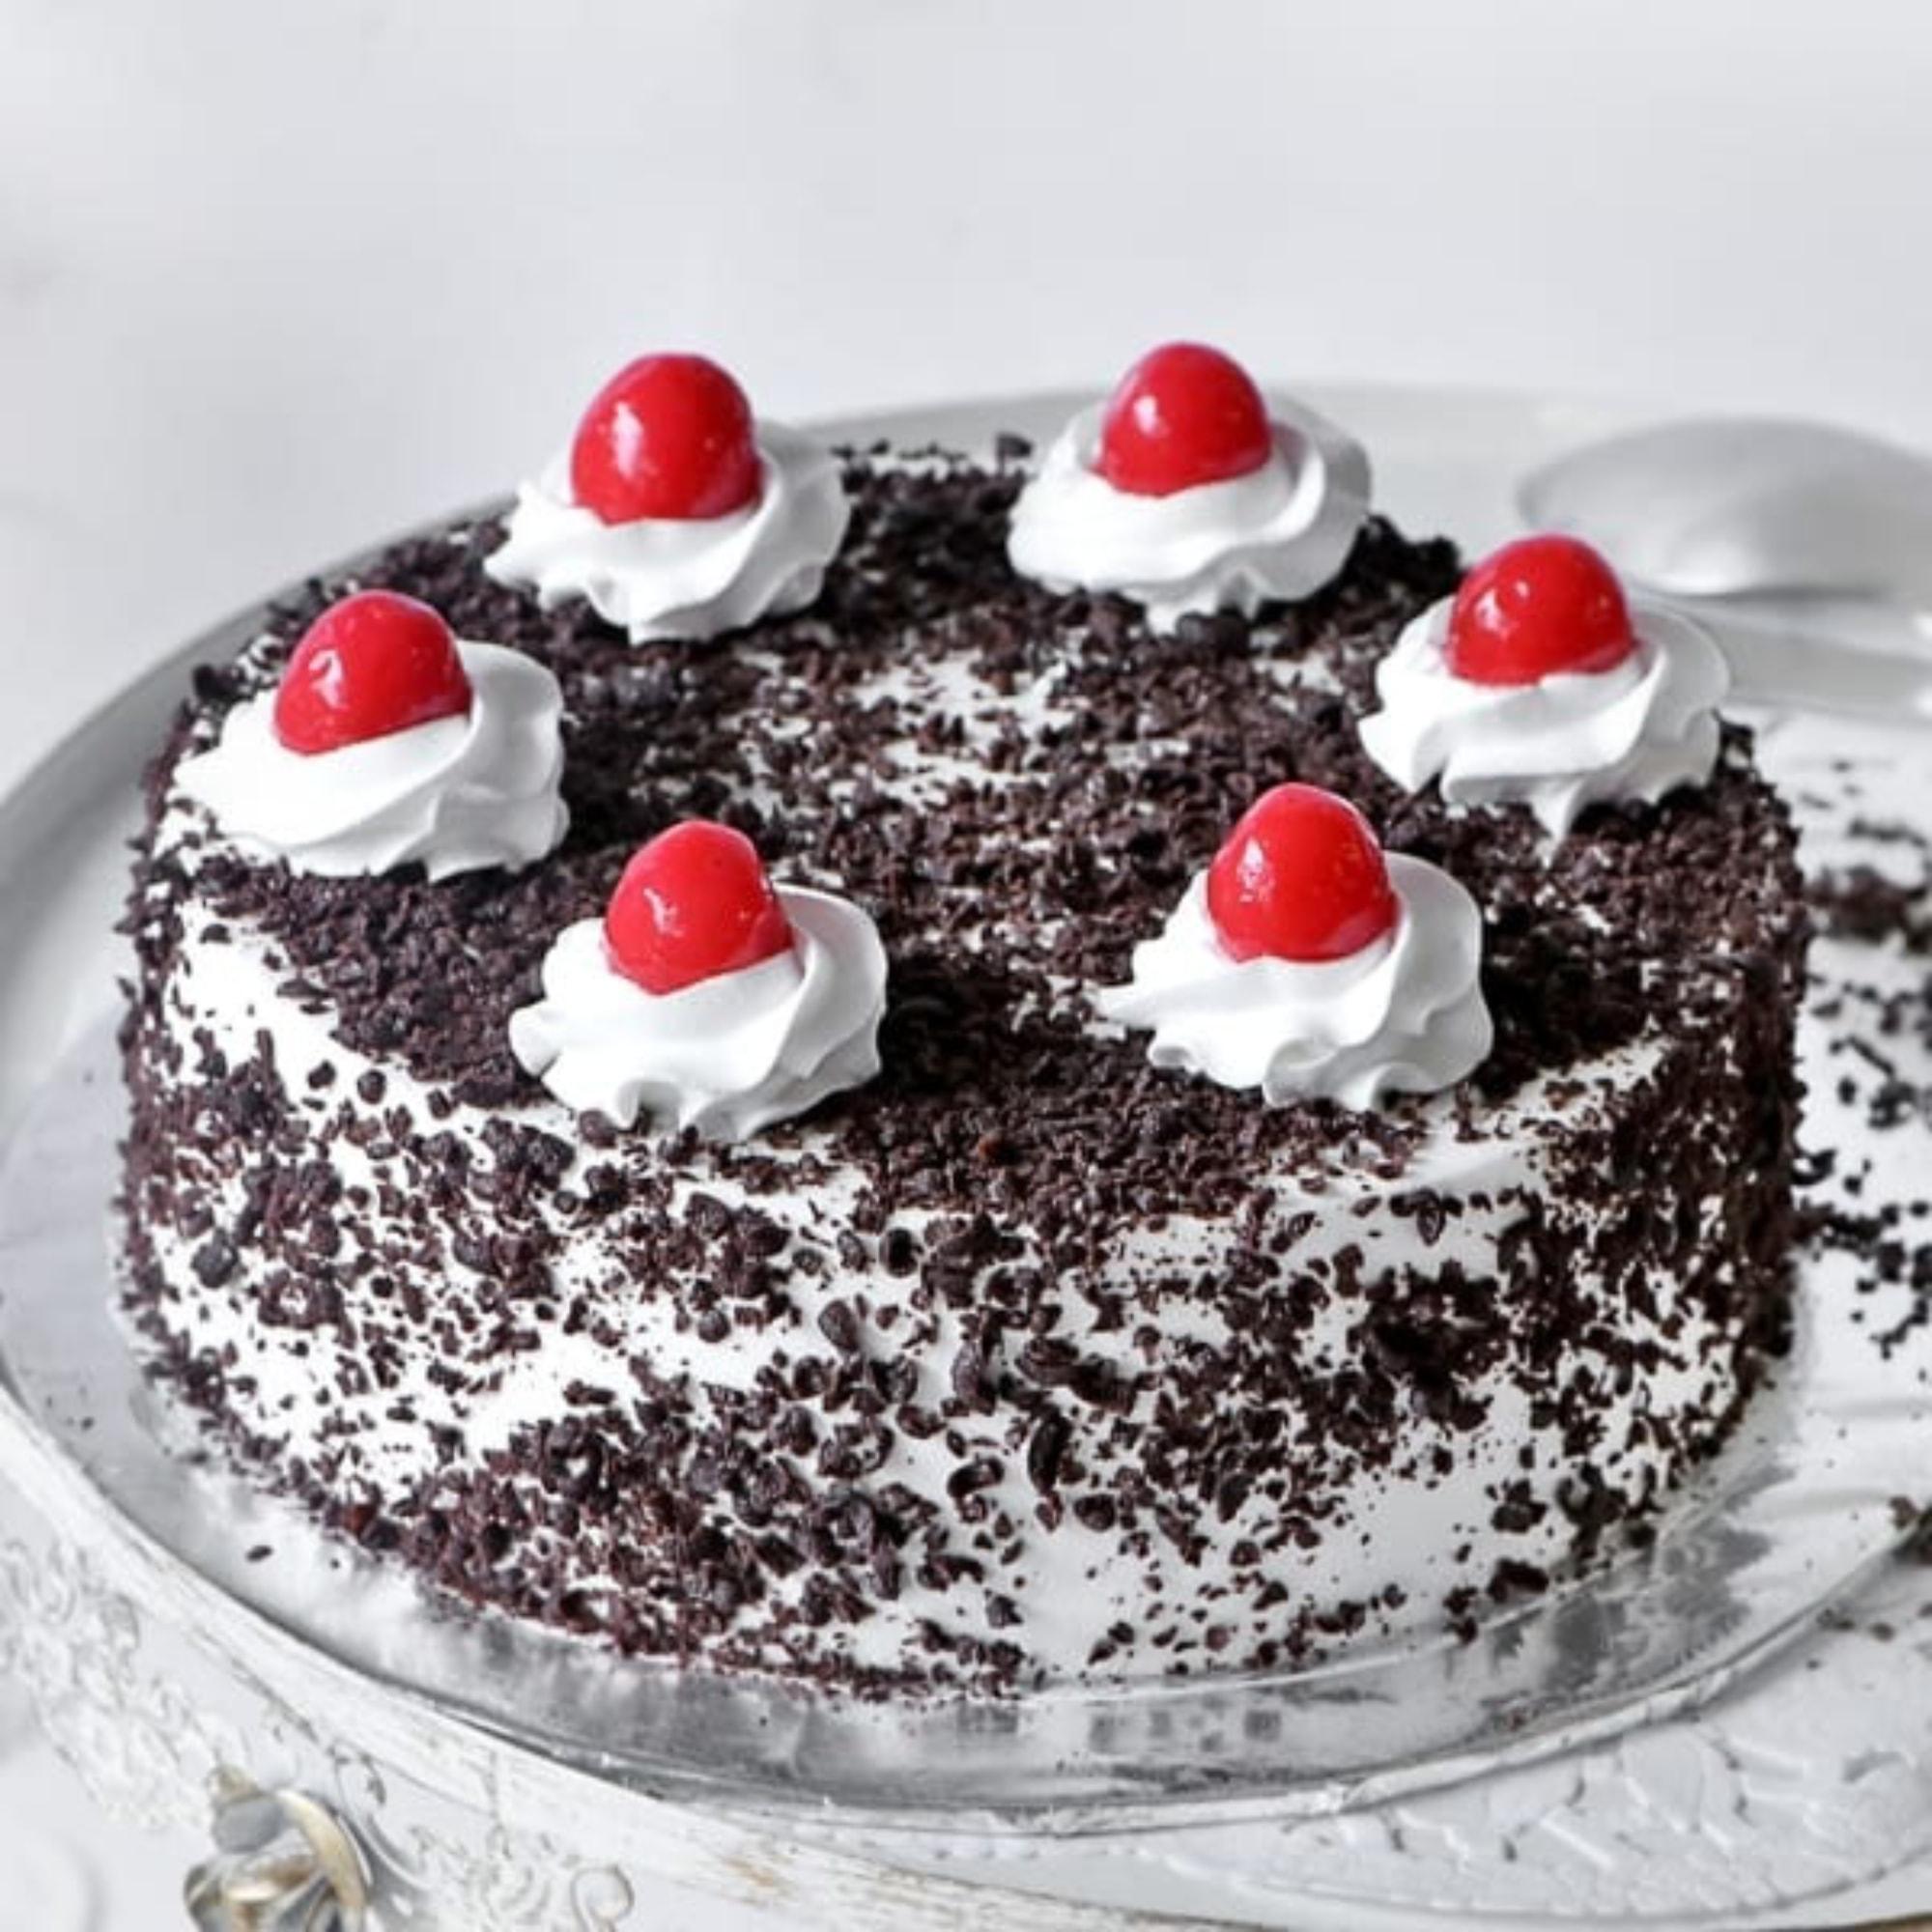 Buy / Order 1 kg OREO CAKE Online at Best Price Same Day- OyeGifts.com